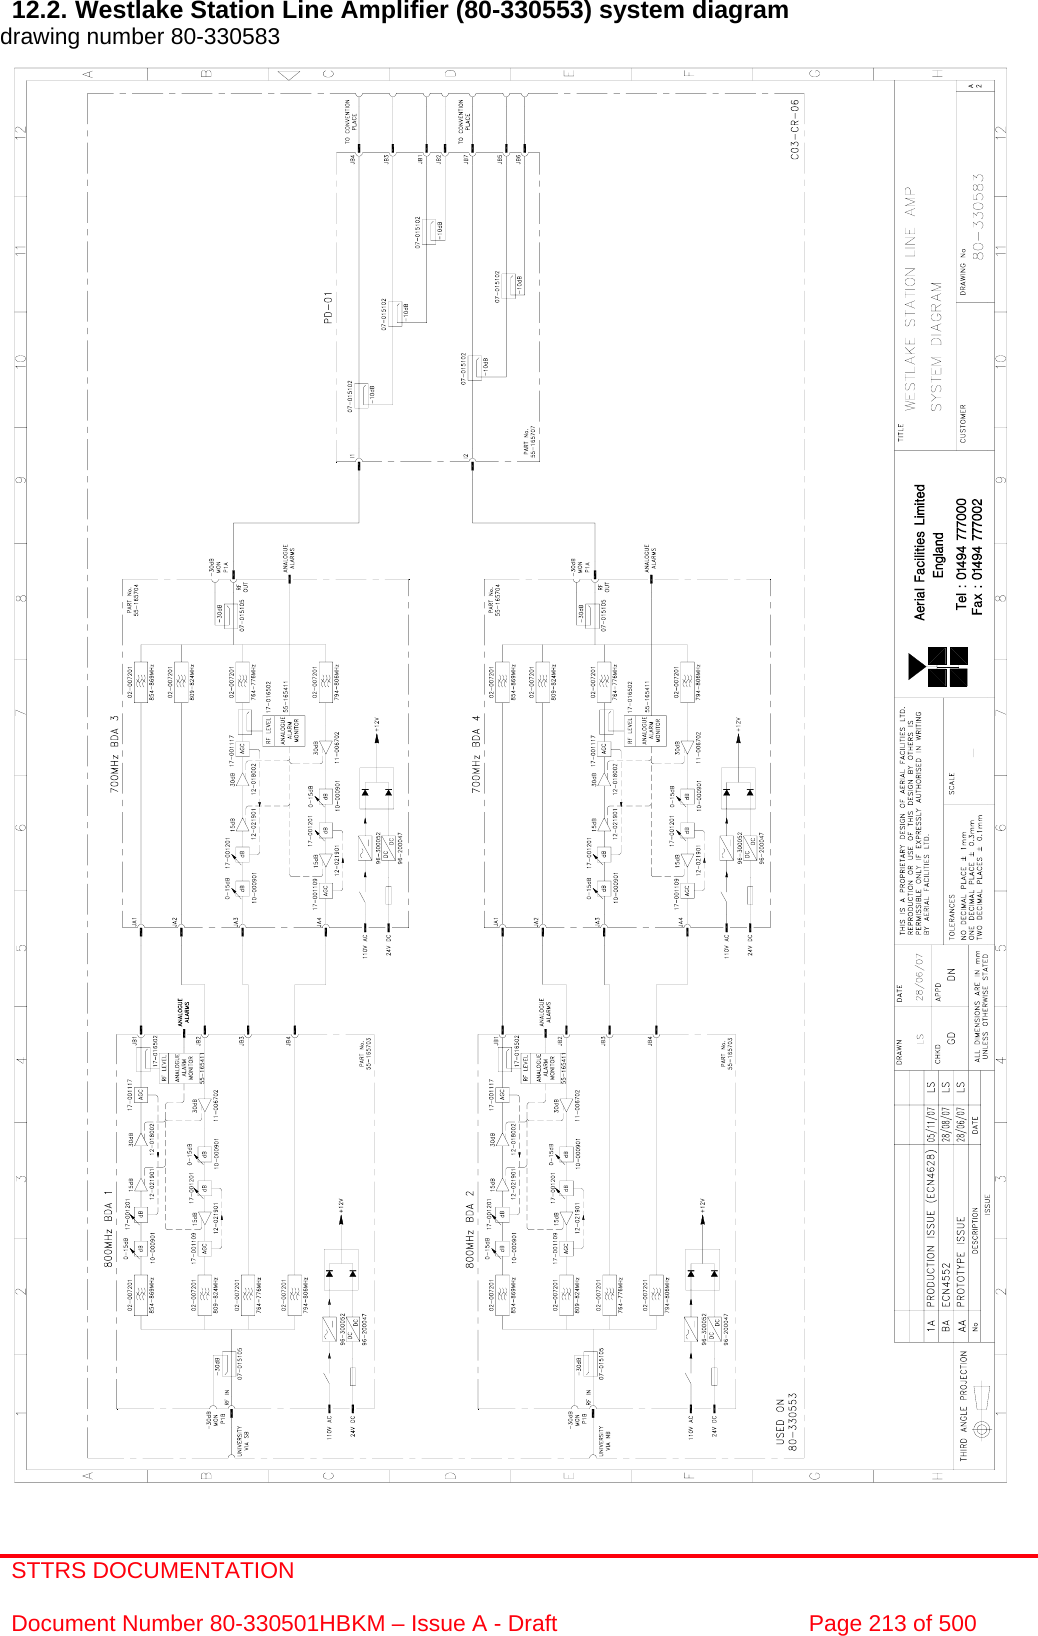 STTRS DOCUMENTATION  Document Number 80-330501HBKM – Issue A - Draft  Page 213 of 500   12.2. Westlake Station Line Amplifier (80-330553) system diagram  drawing number 80-330583                                                        